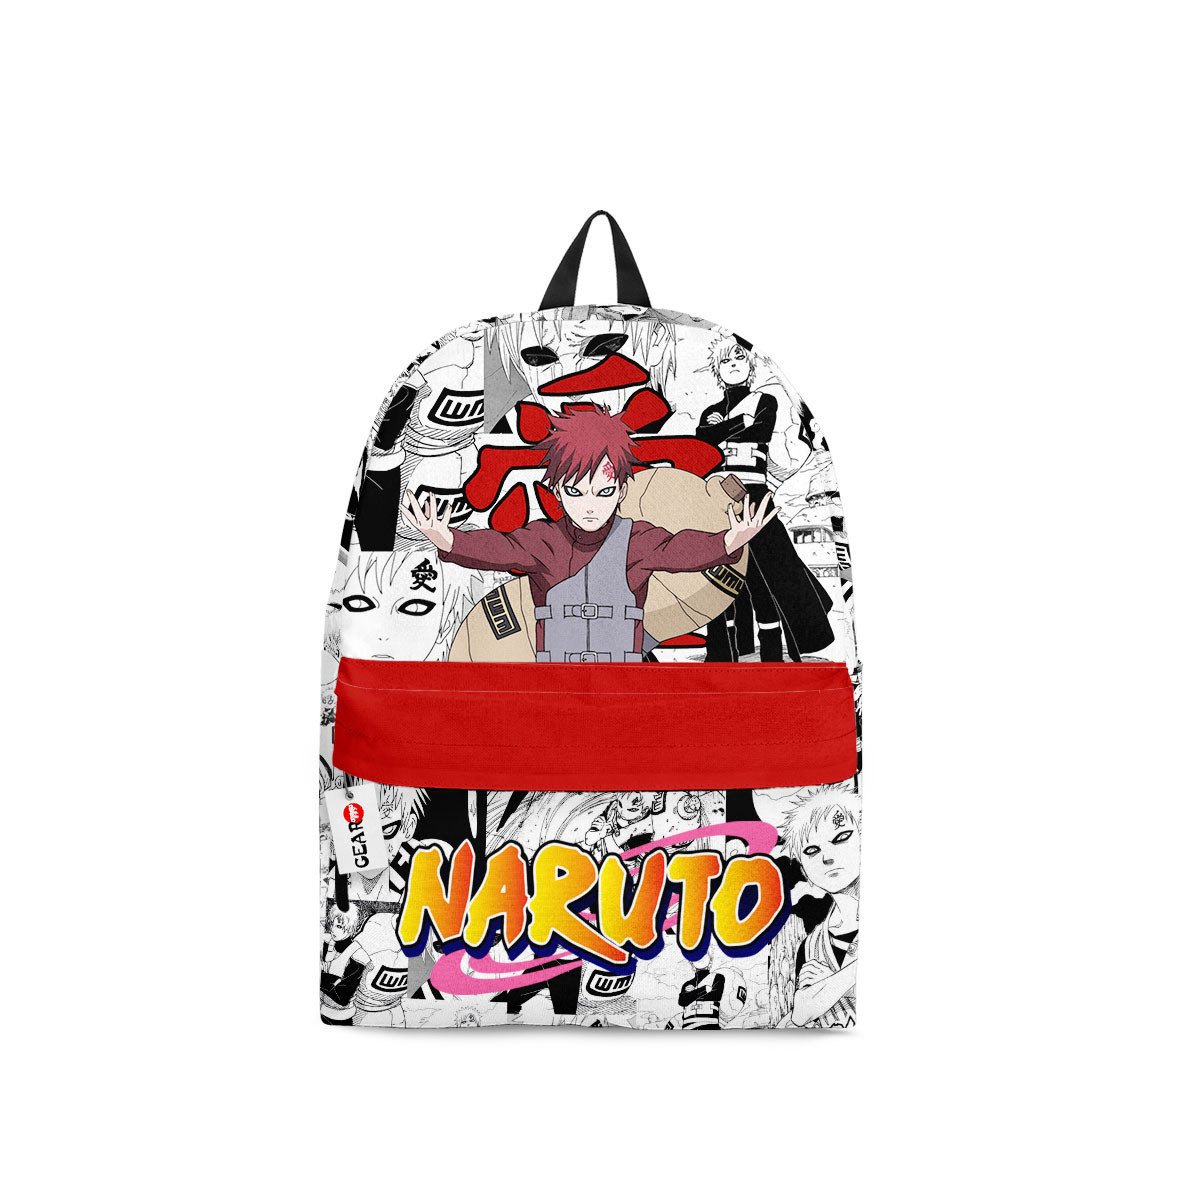 BEST Gaara Naruto Anime Manga Style Printed 3D Leisure Backpack